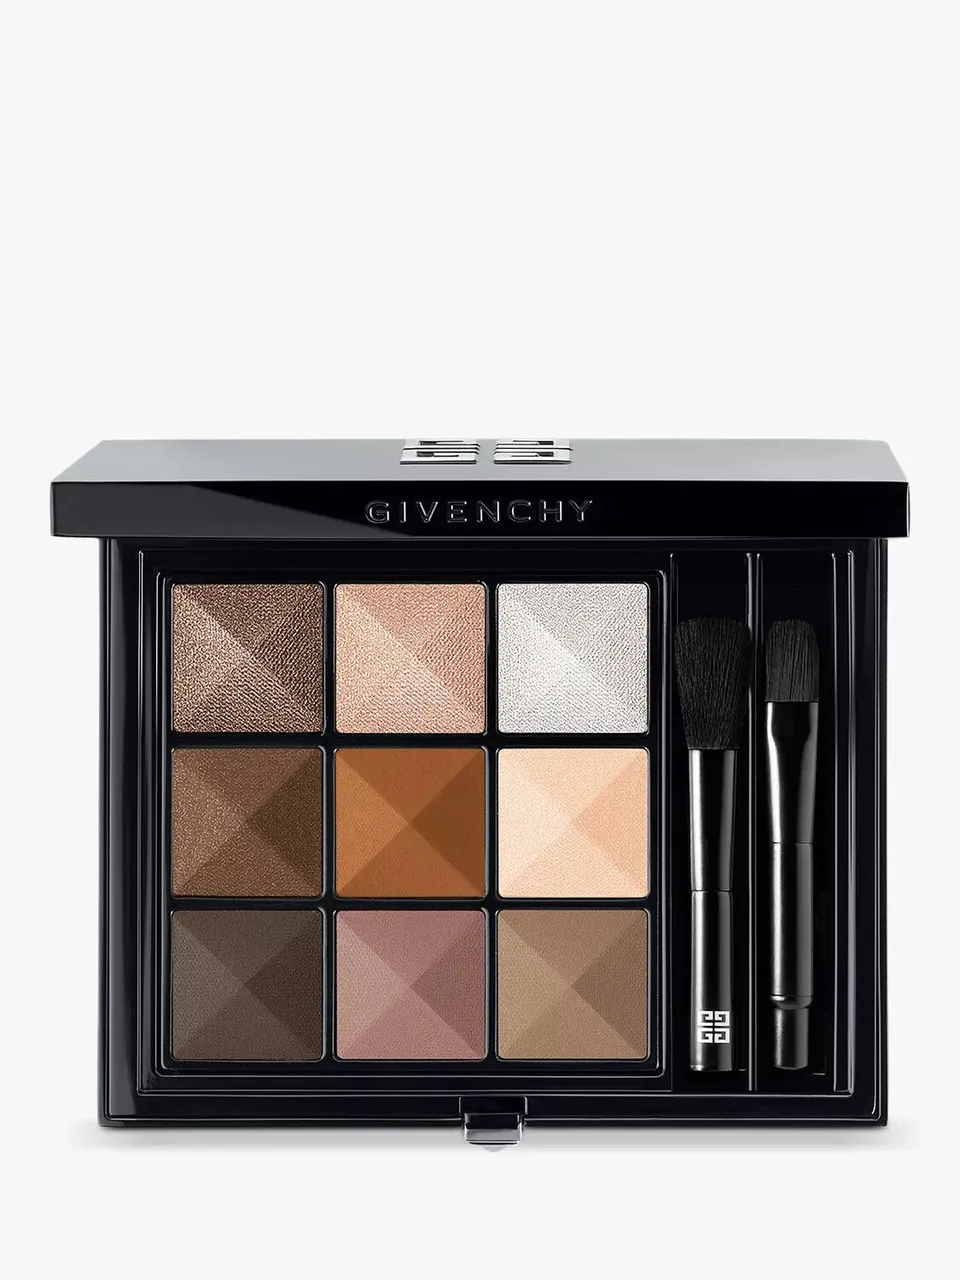 Givenchy Le 9 de Givenchy Multi-Finish Eyeshadow Palette - N12 - Unisex